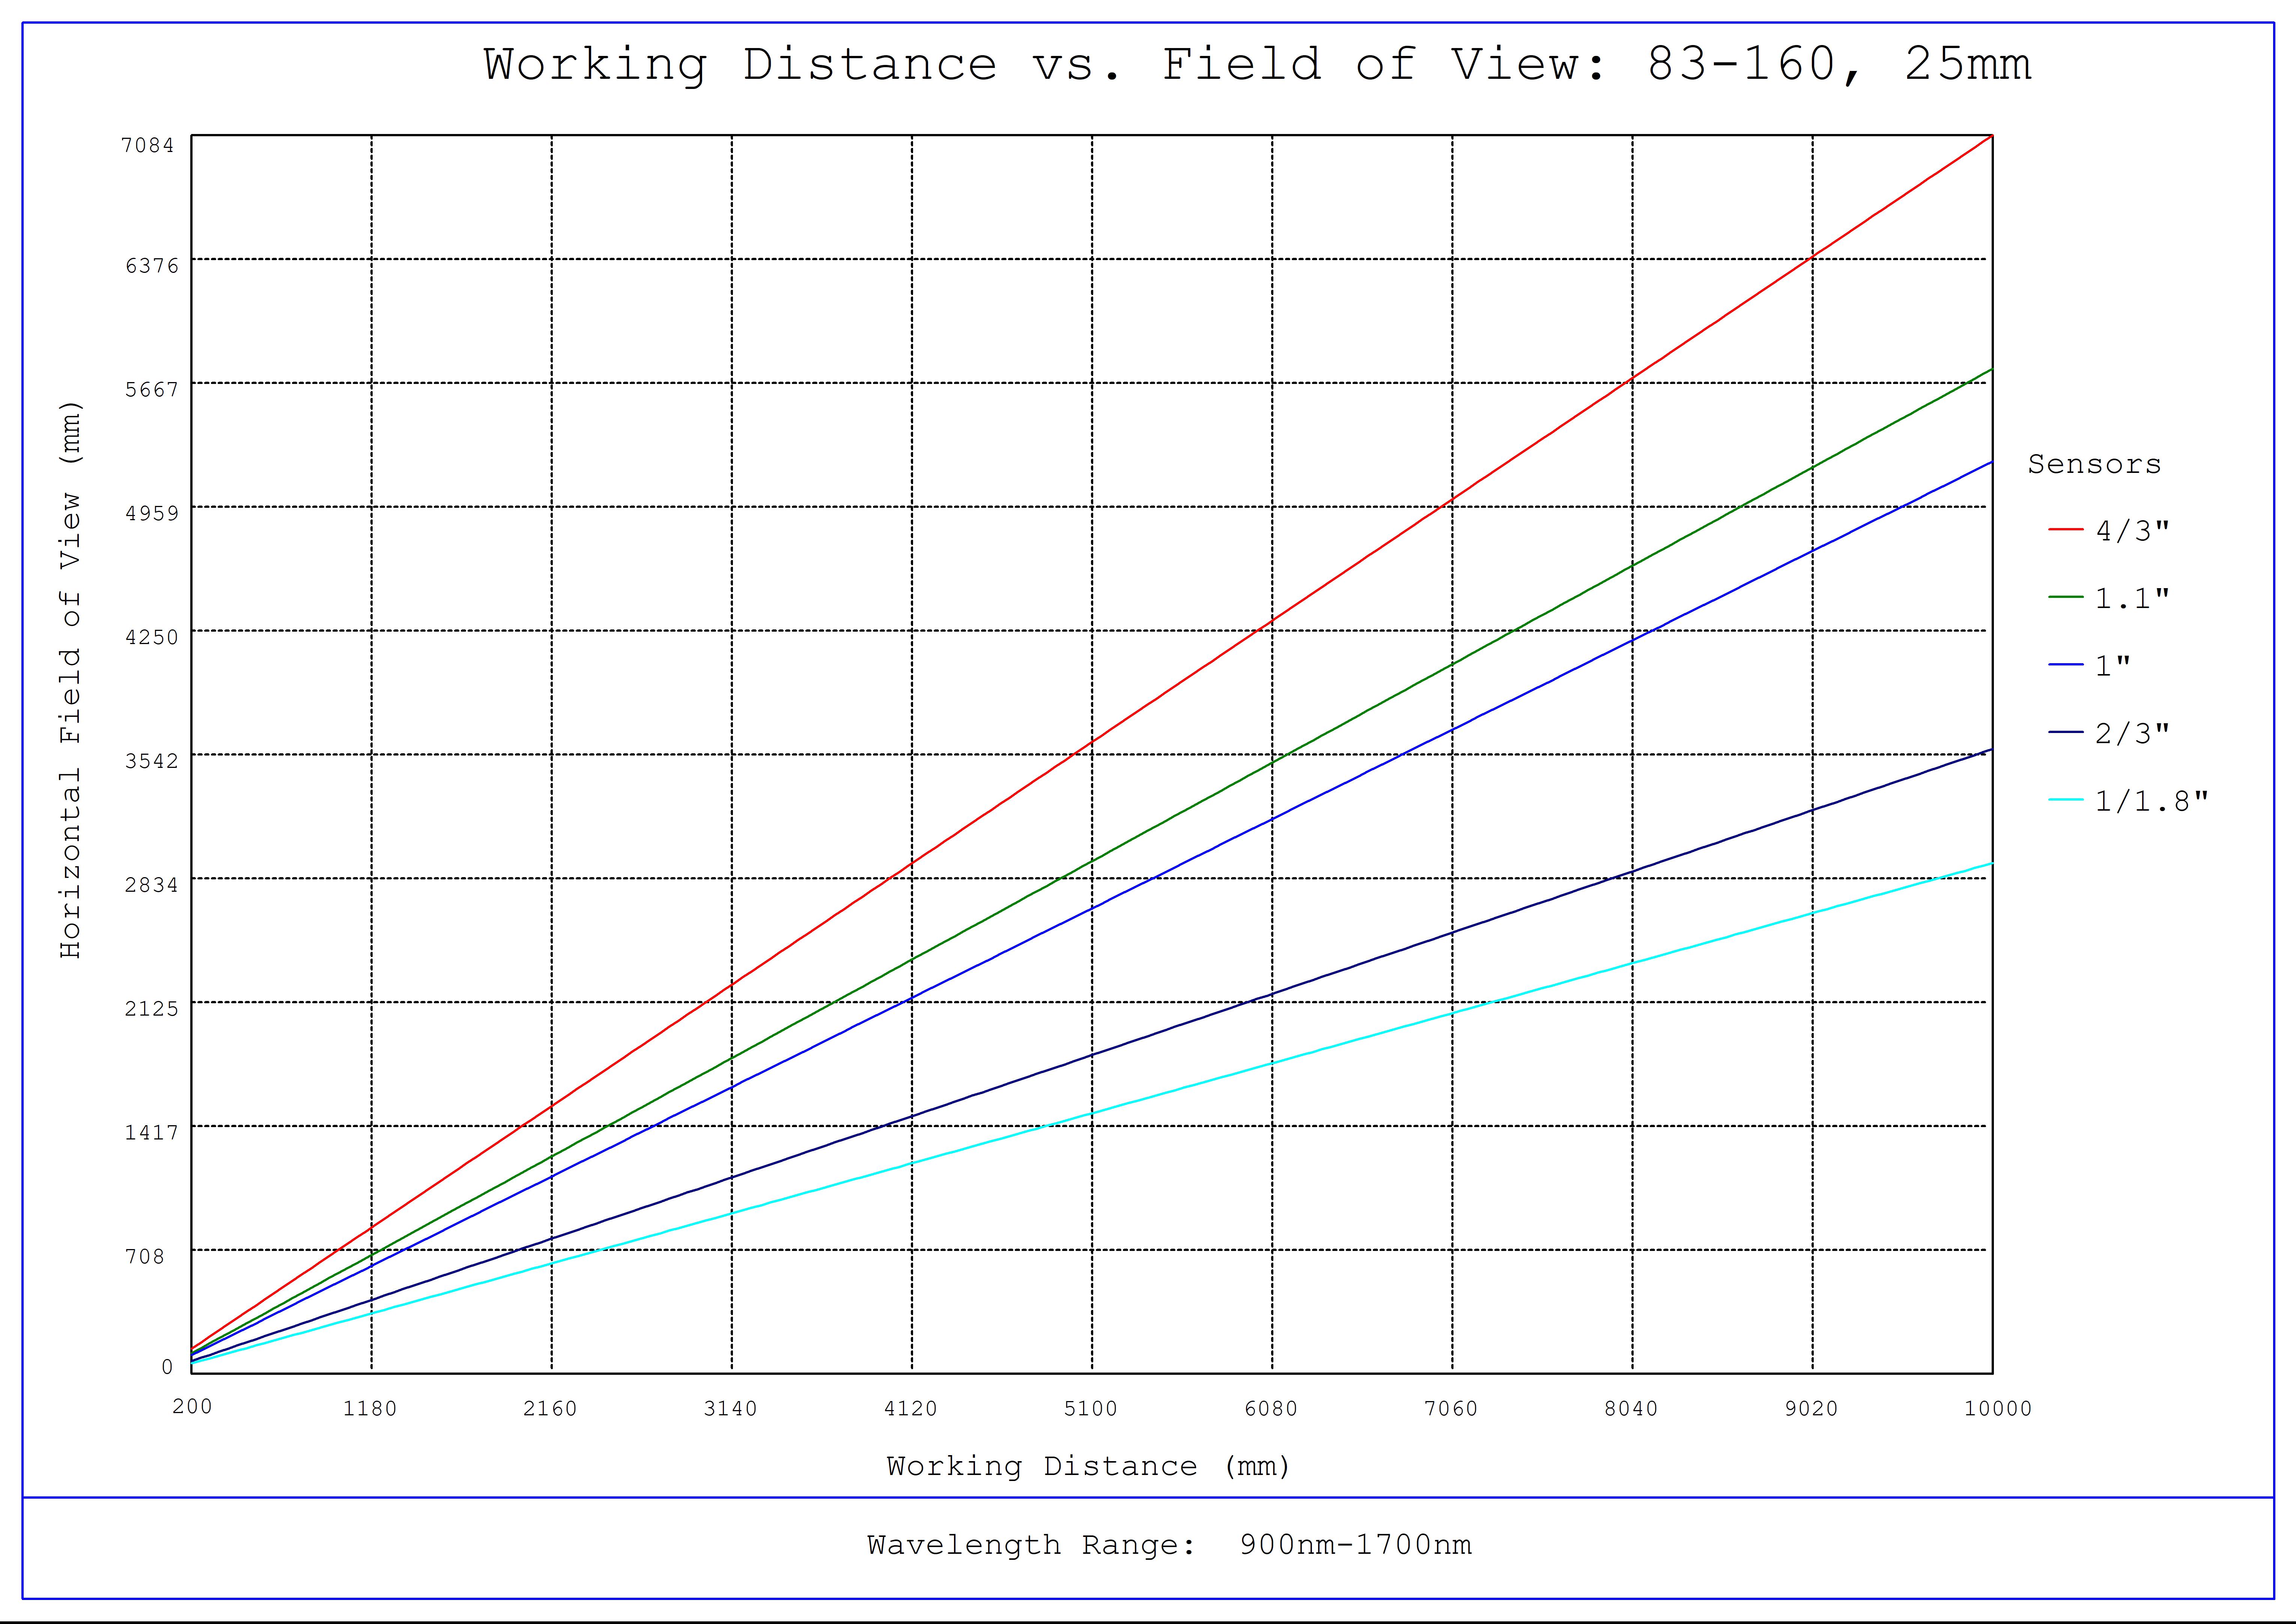 #83-160, 25mm SWIR Series Fixed Focal Length Lens, Working Distance versus Field of View Plot